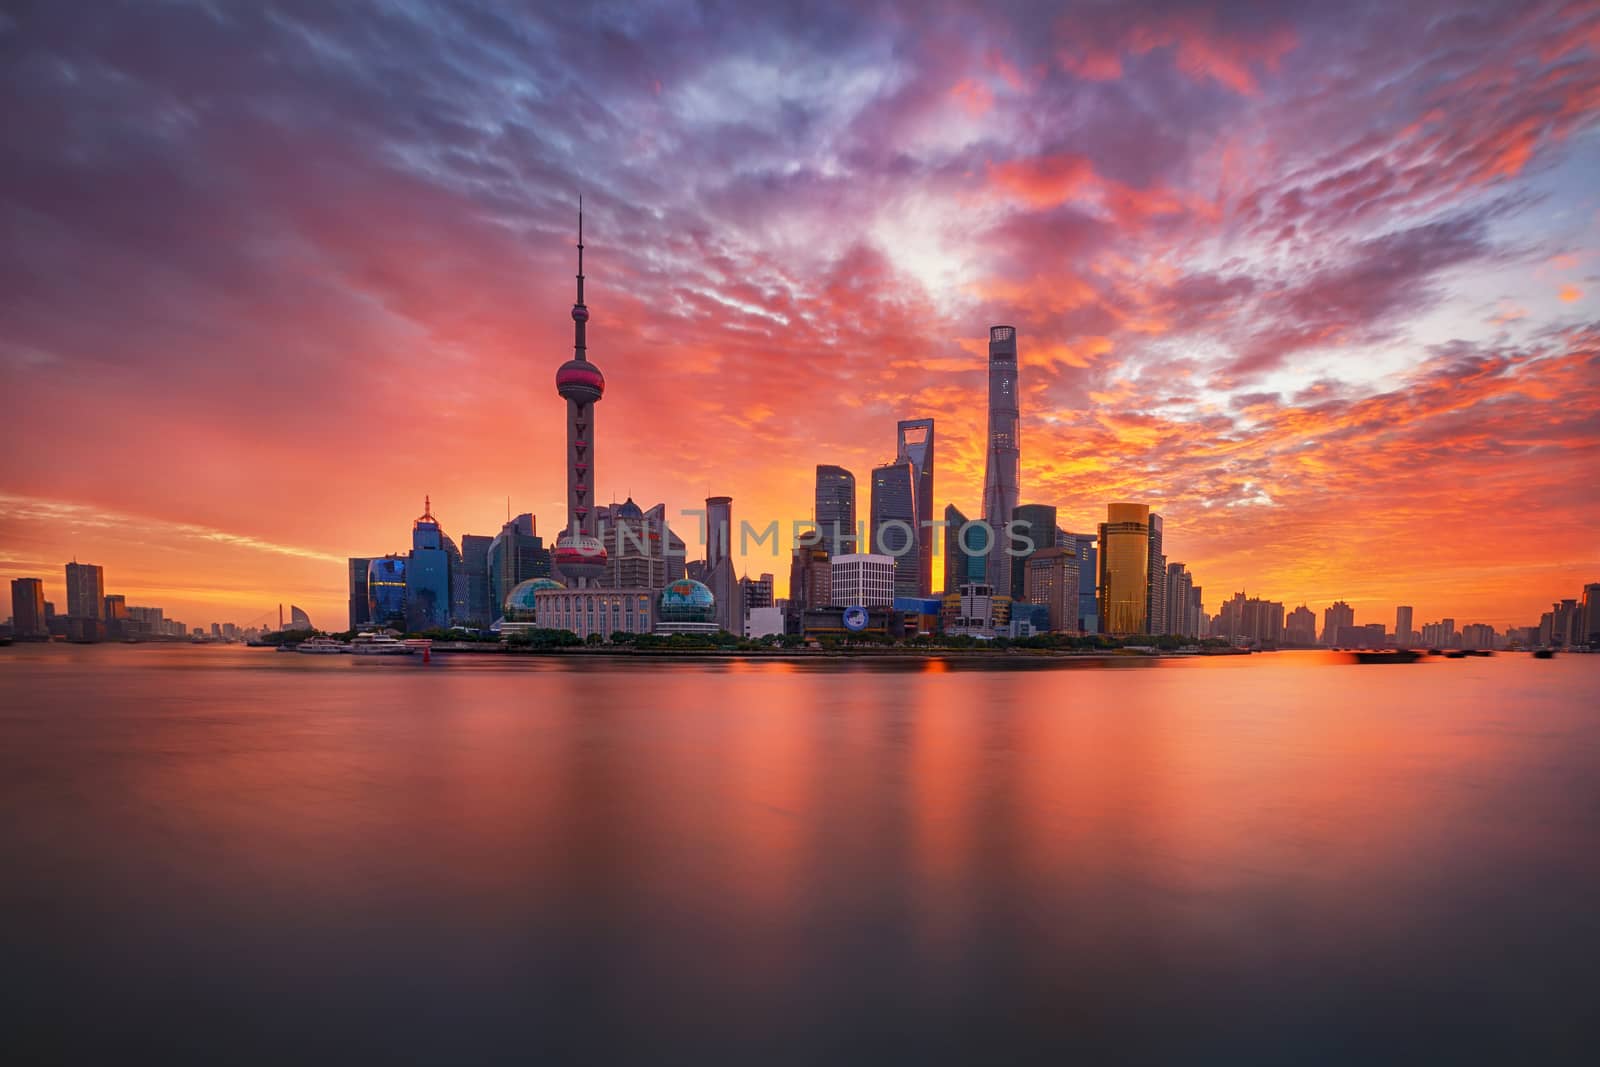 sunrise over Lujiazui skyline and Huangpu river, Shanghai, China by zhu_zhu